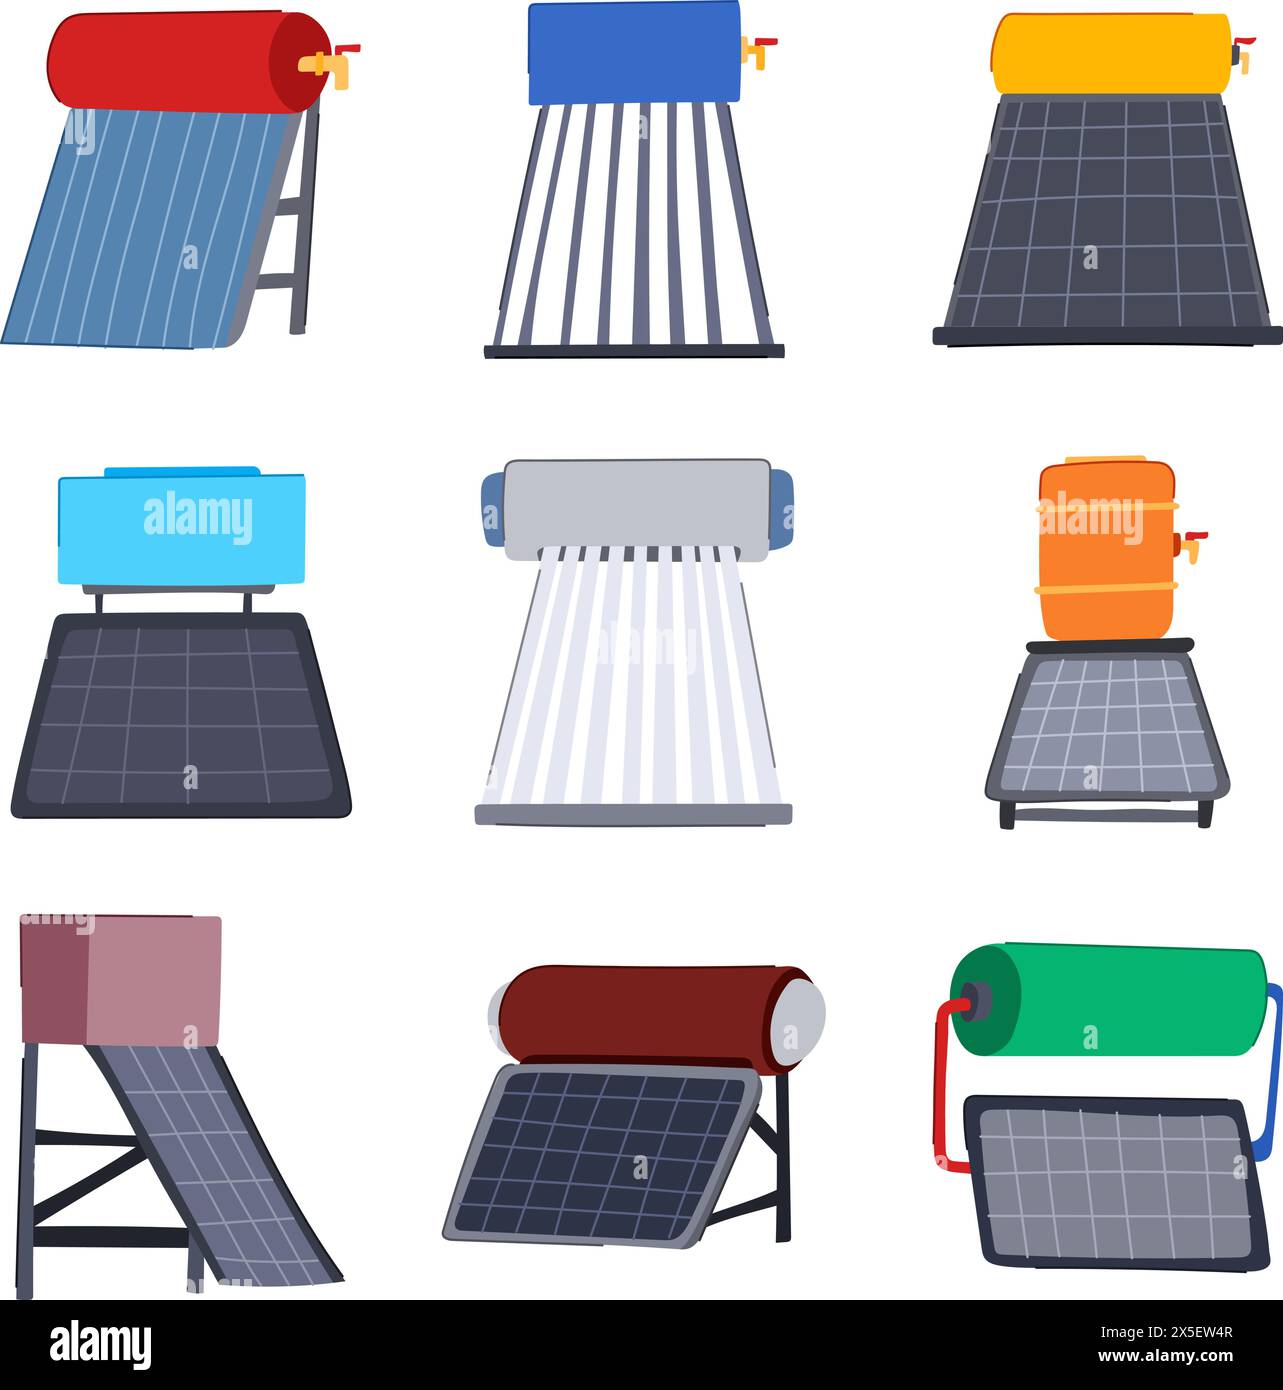 solar water heater set cartoon vector illustration Stock Vector